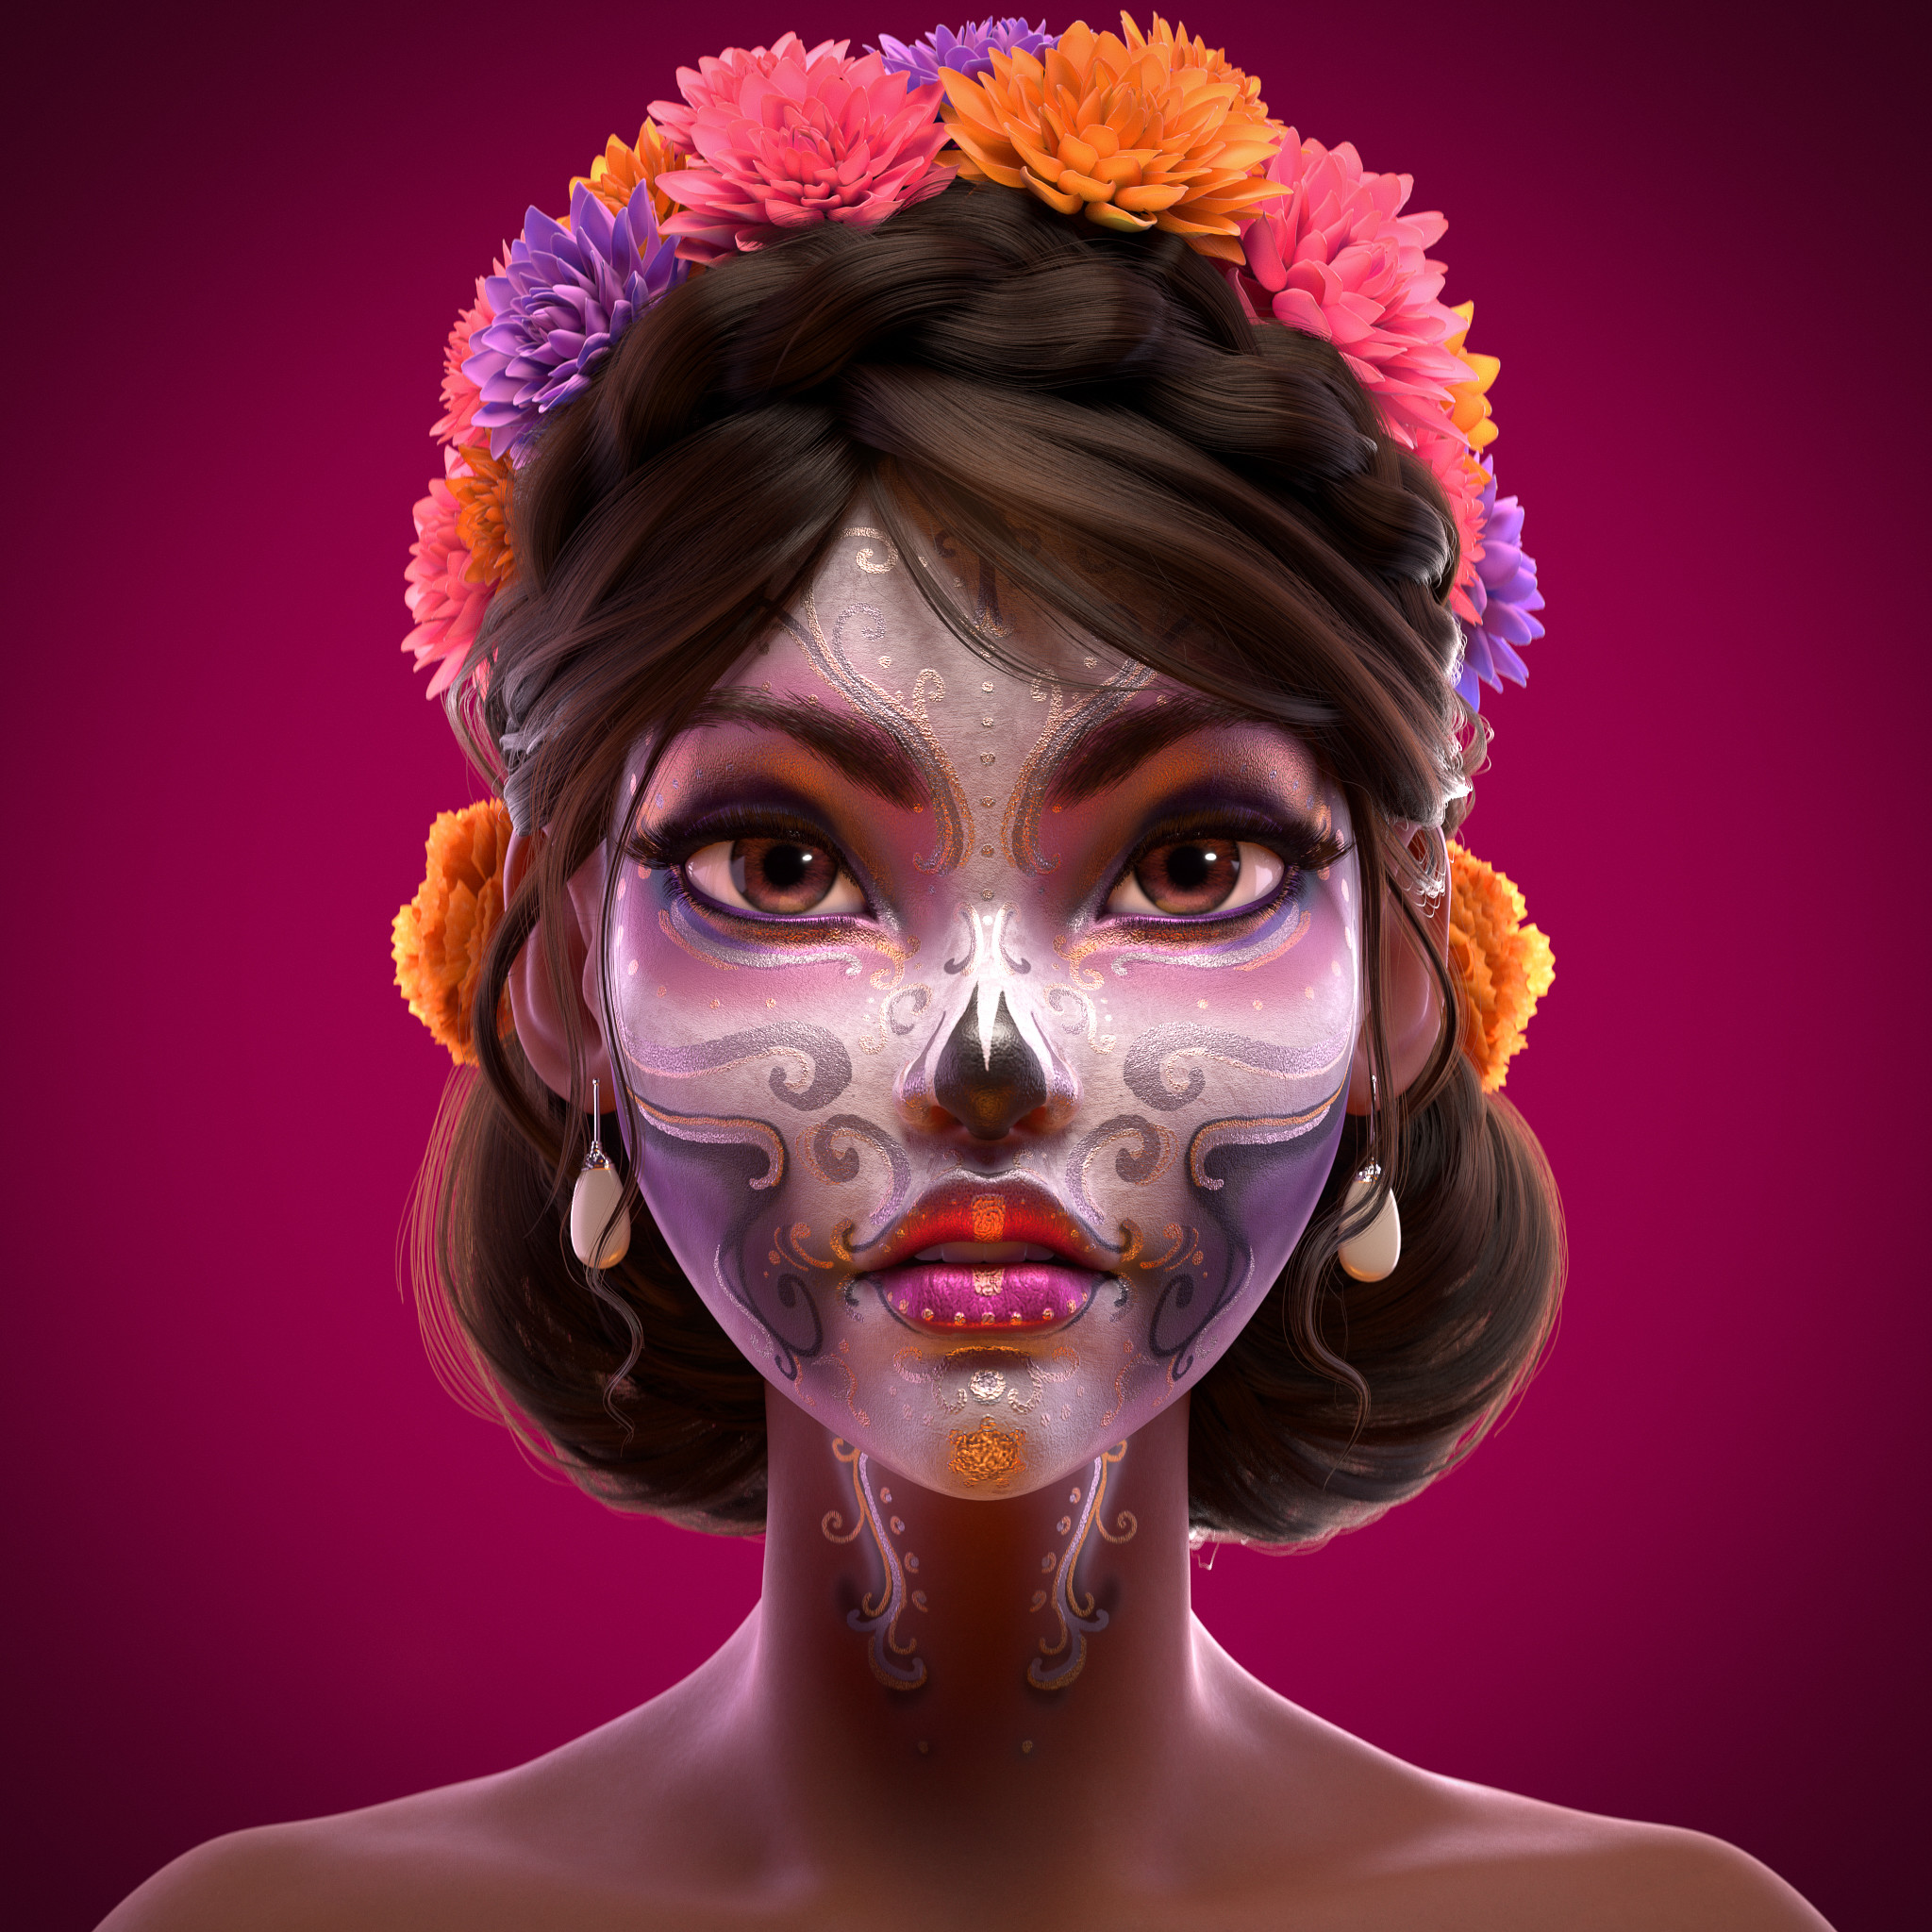 General 2048x2048 artwork women face portrait Dia de los Muertos makeup flower in hair Sugar Skull Ernesto Ruiz Velasco